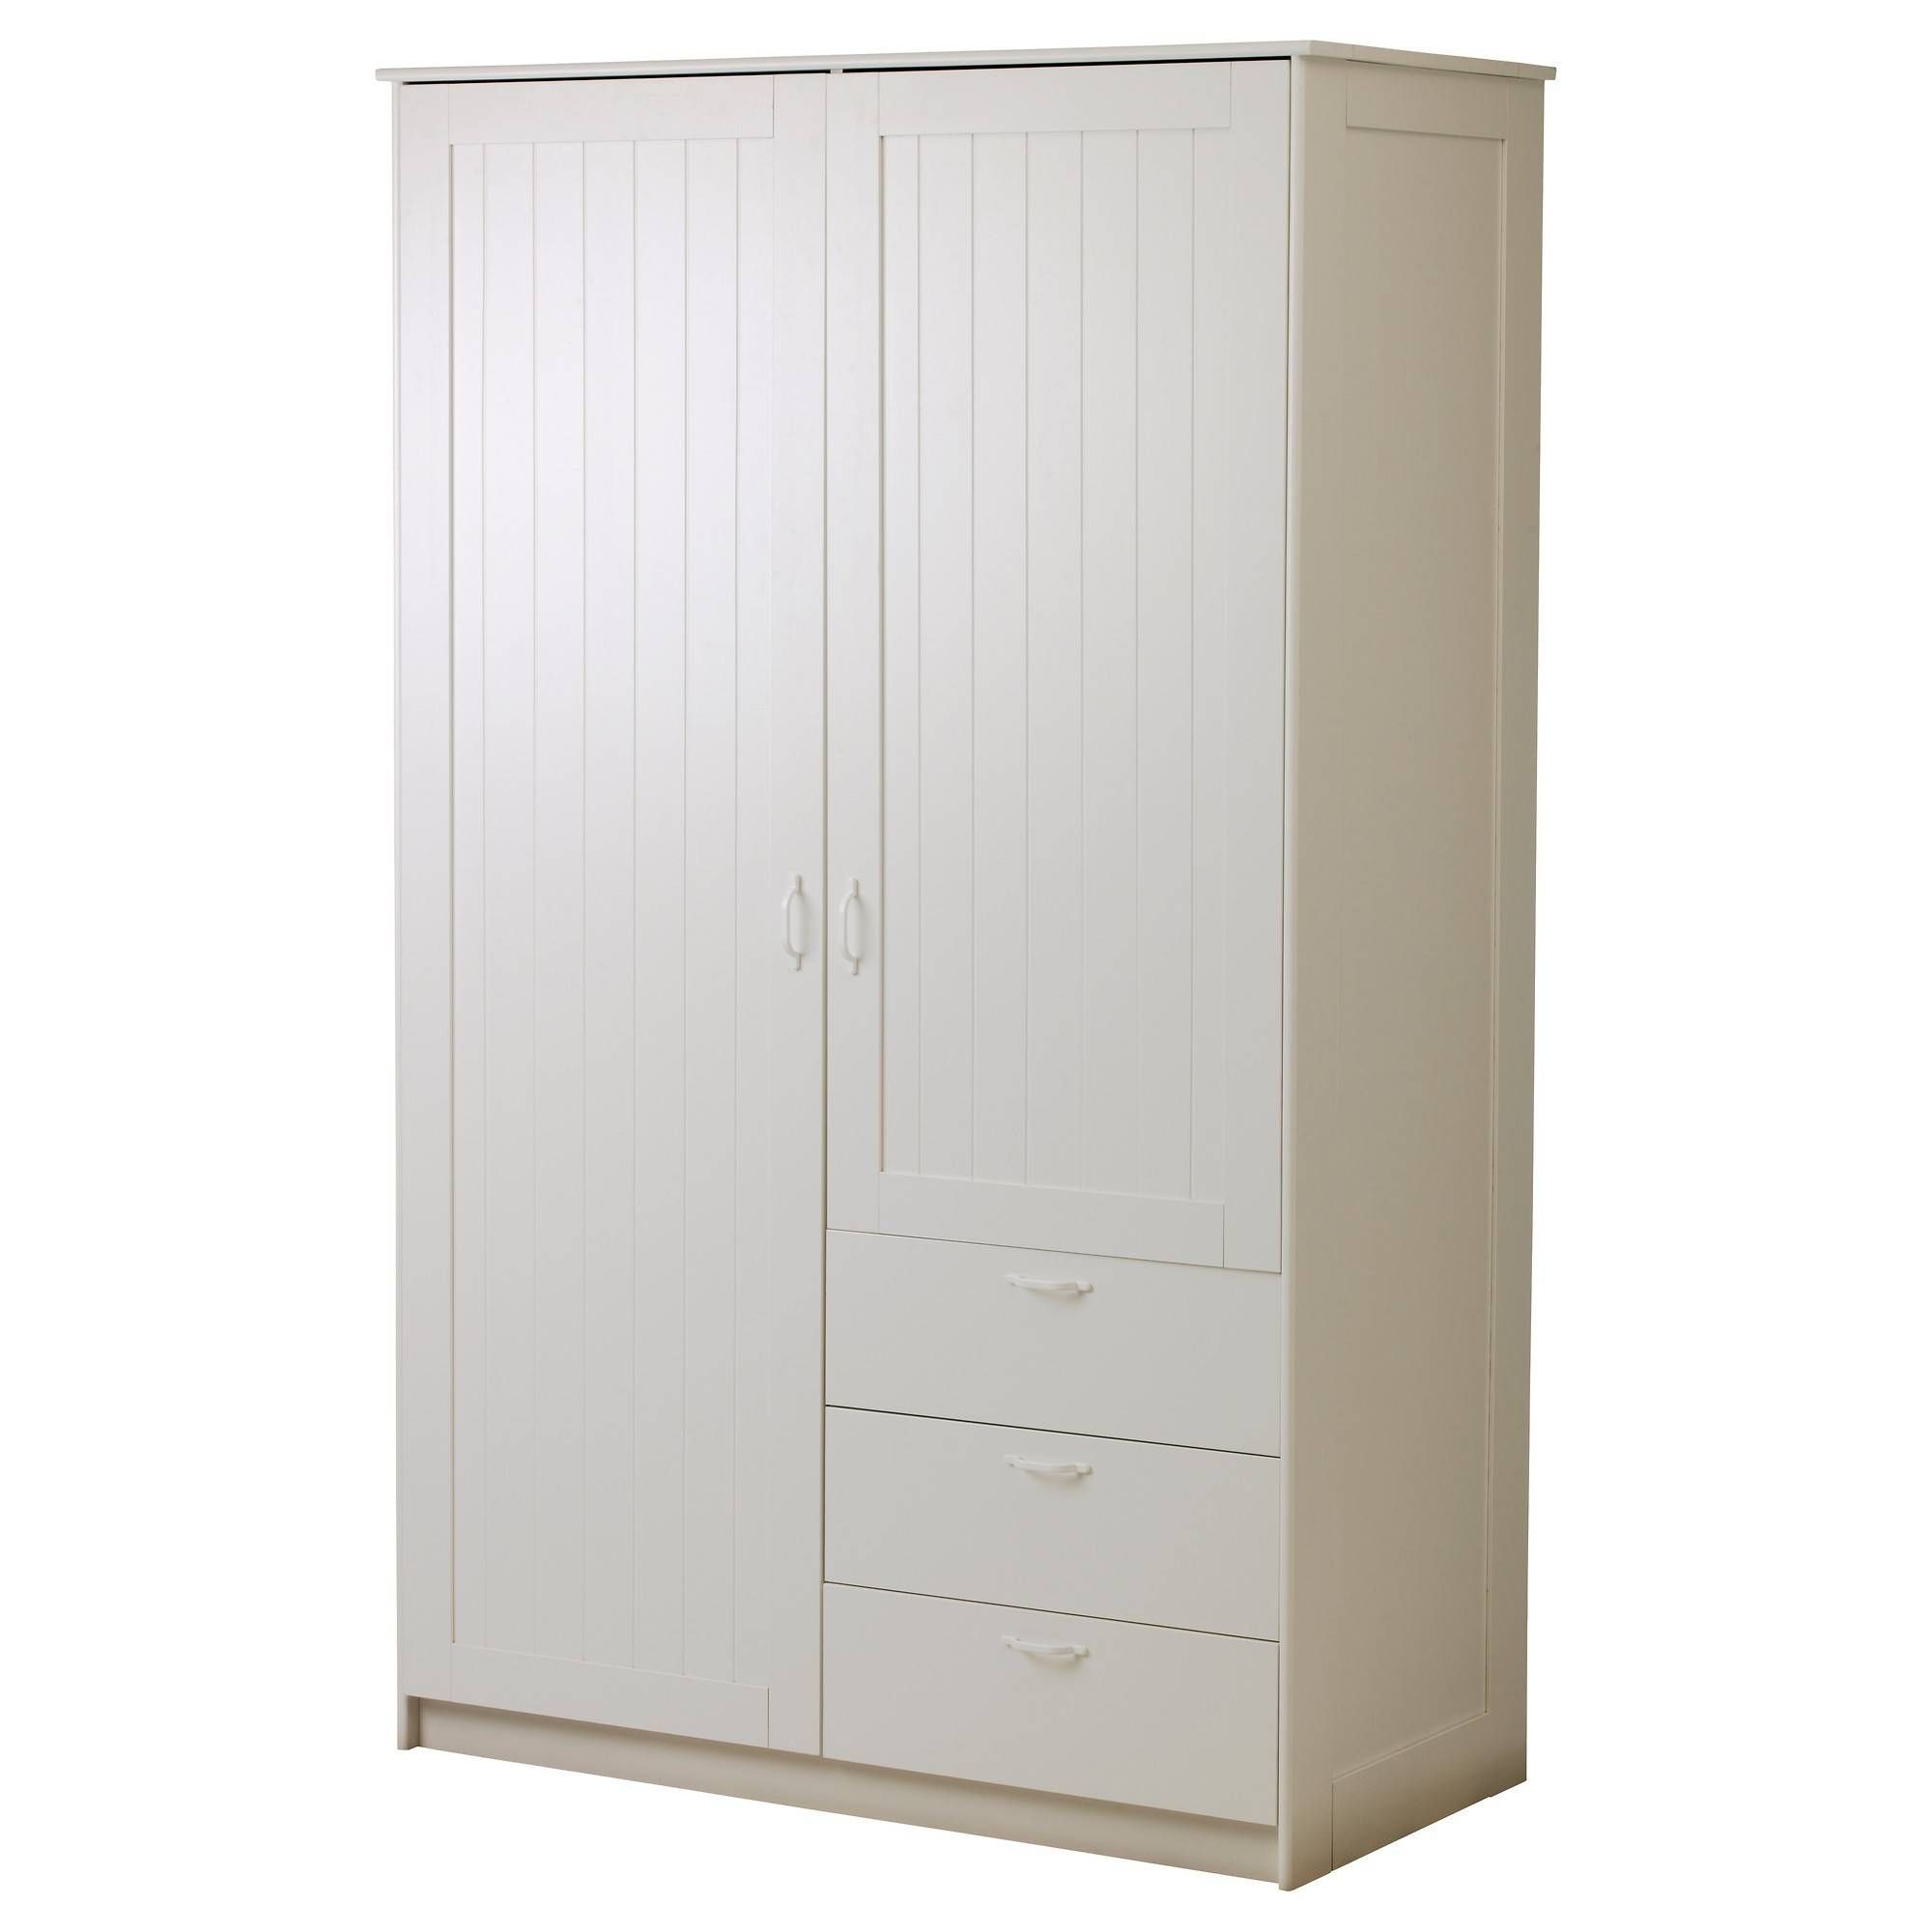 High White Wooden Wardrobe With Storage Also Three Drawers On The Regarding White Wooden Wardrobes (View 12 of 15)